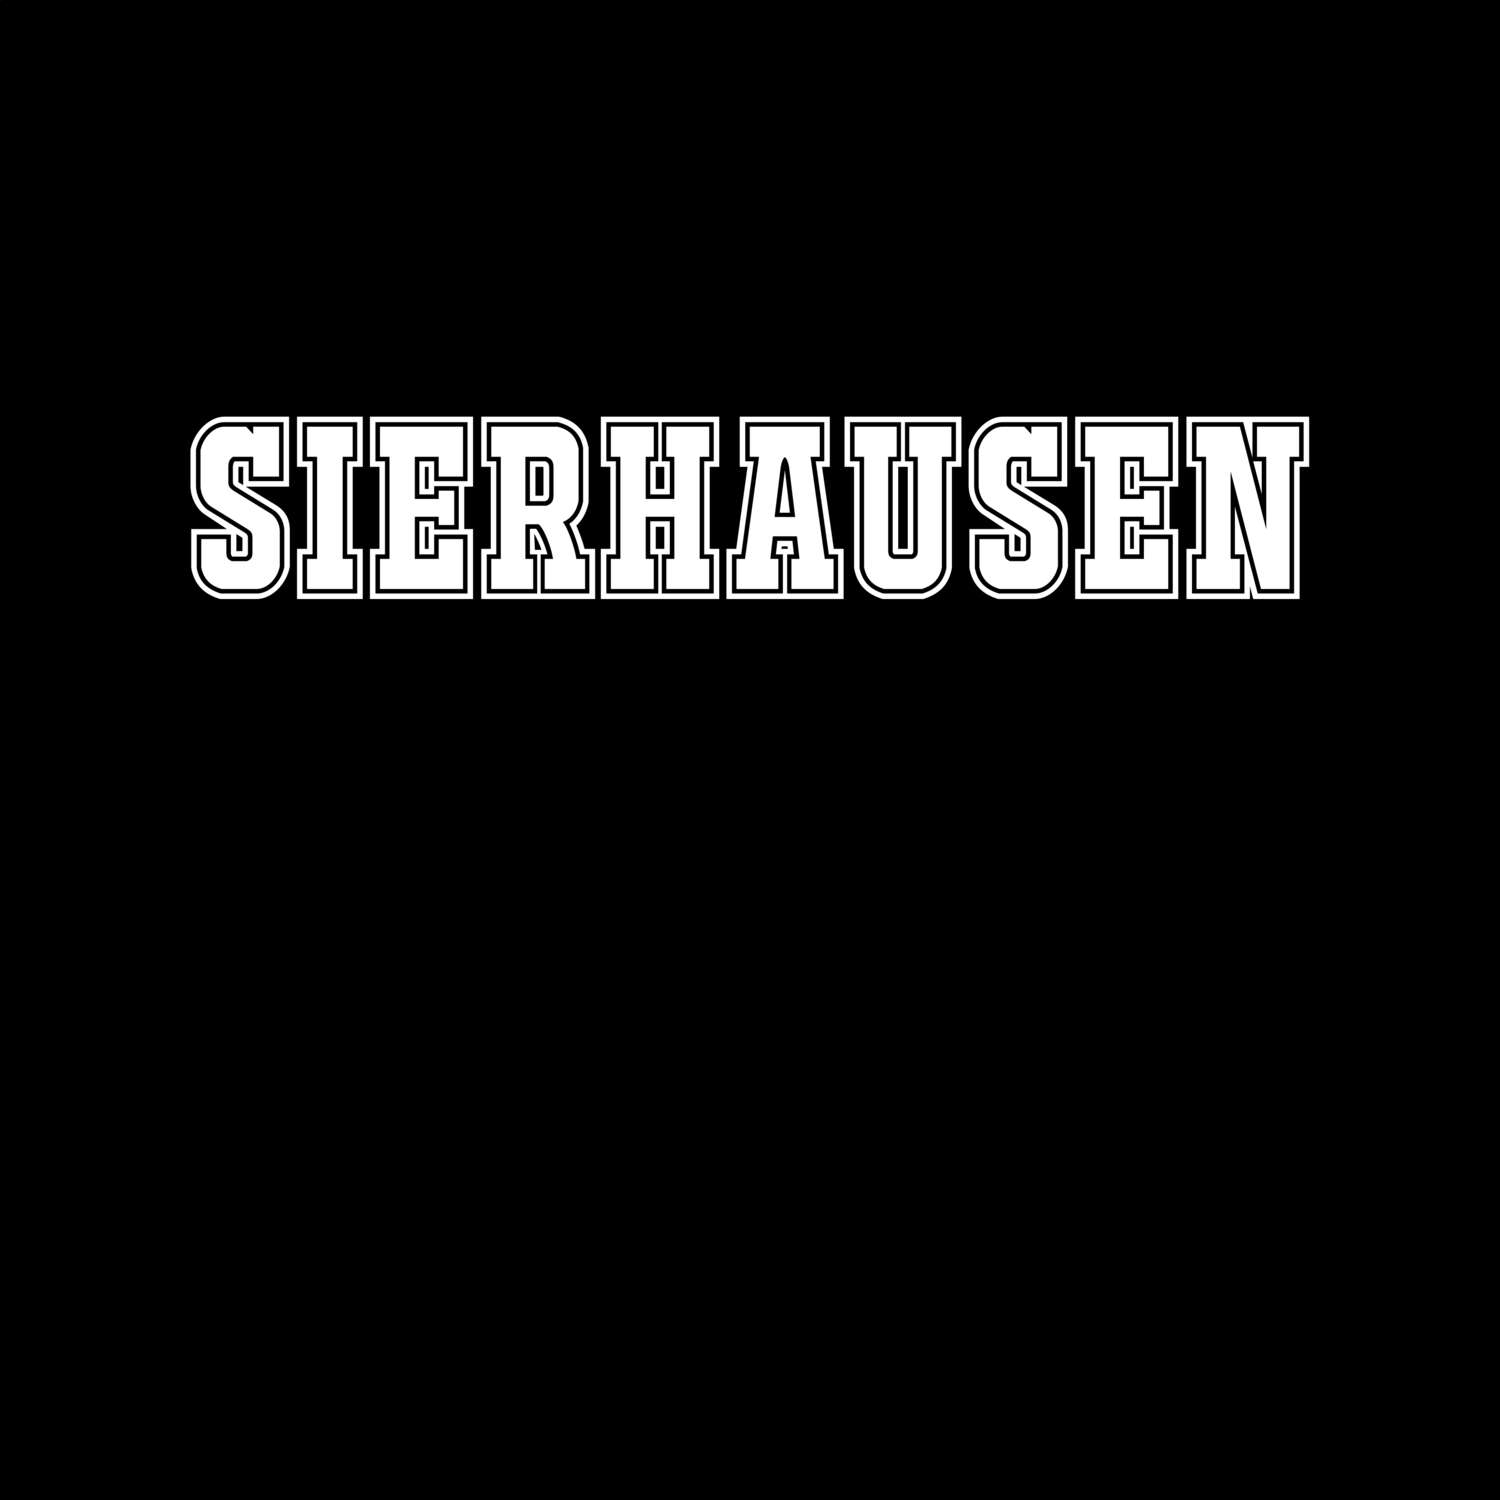 Sierhausen T-Shirt »Classic«